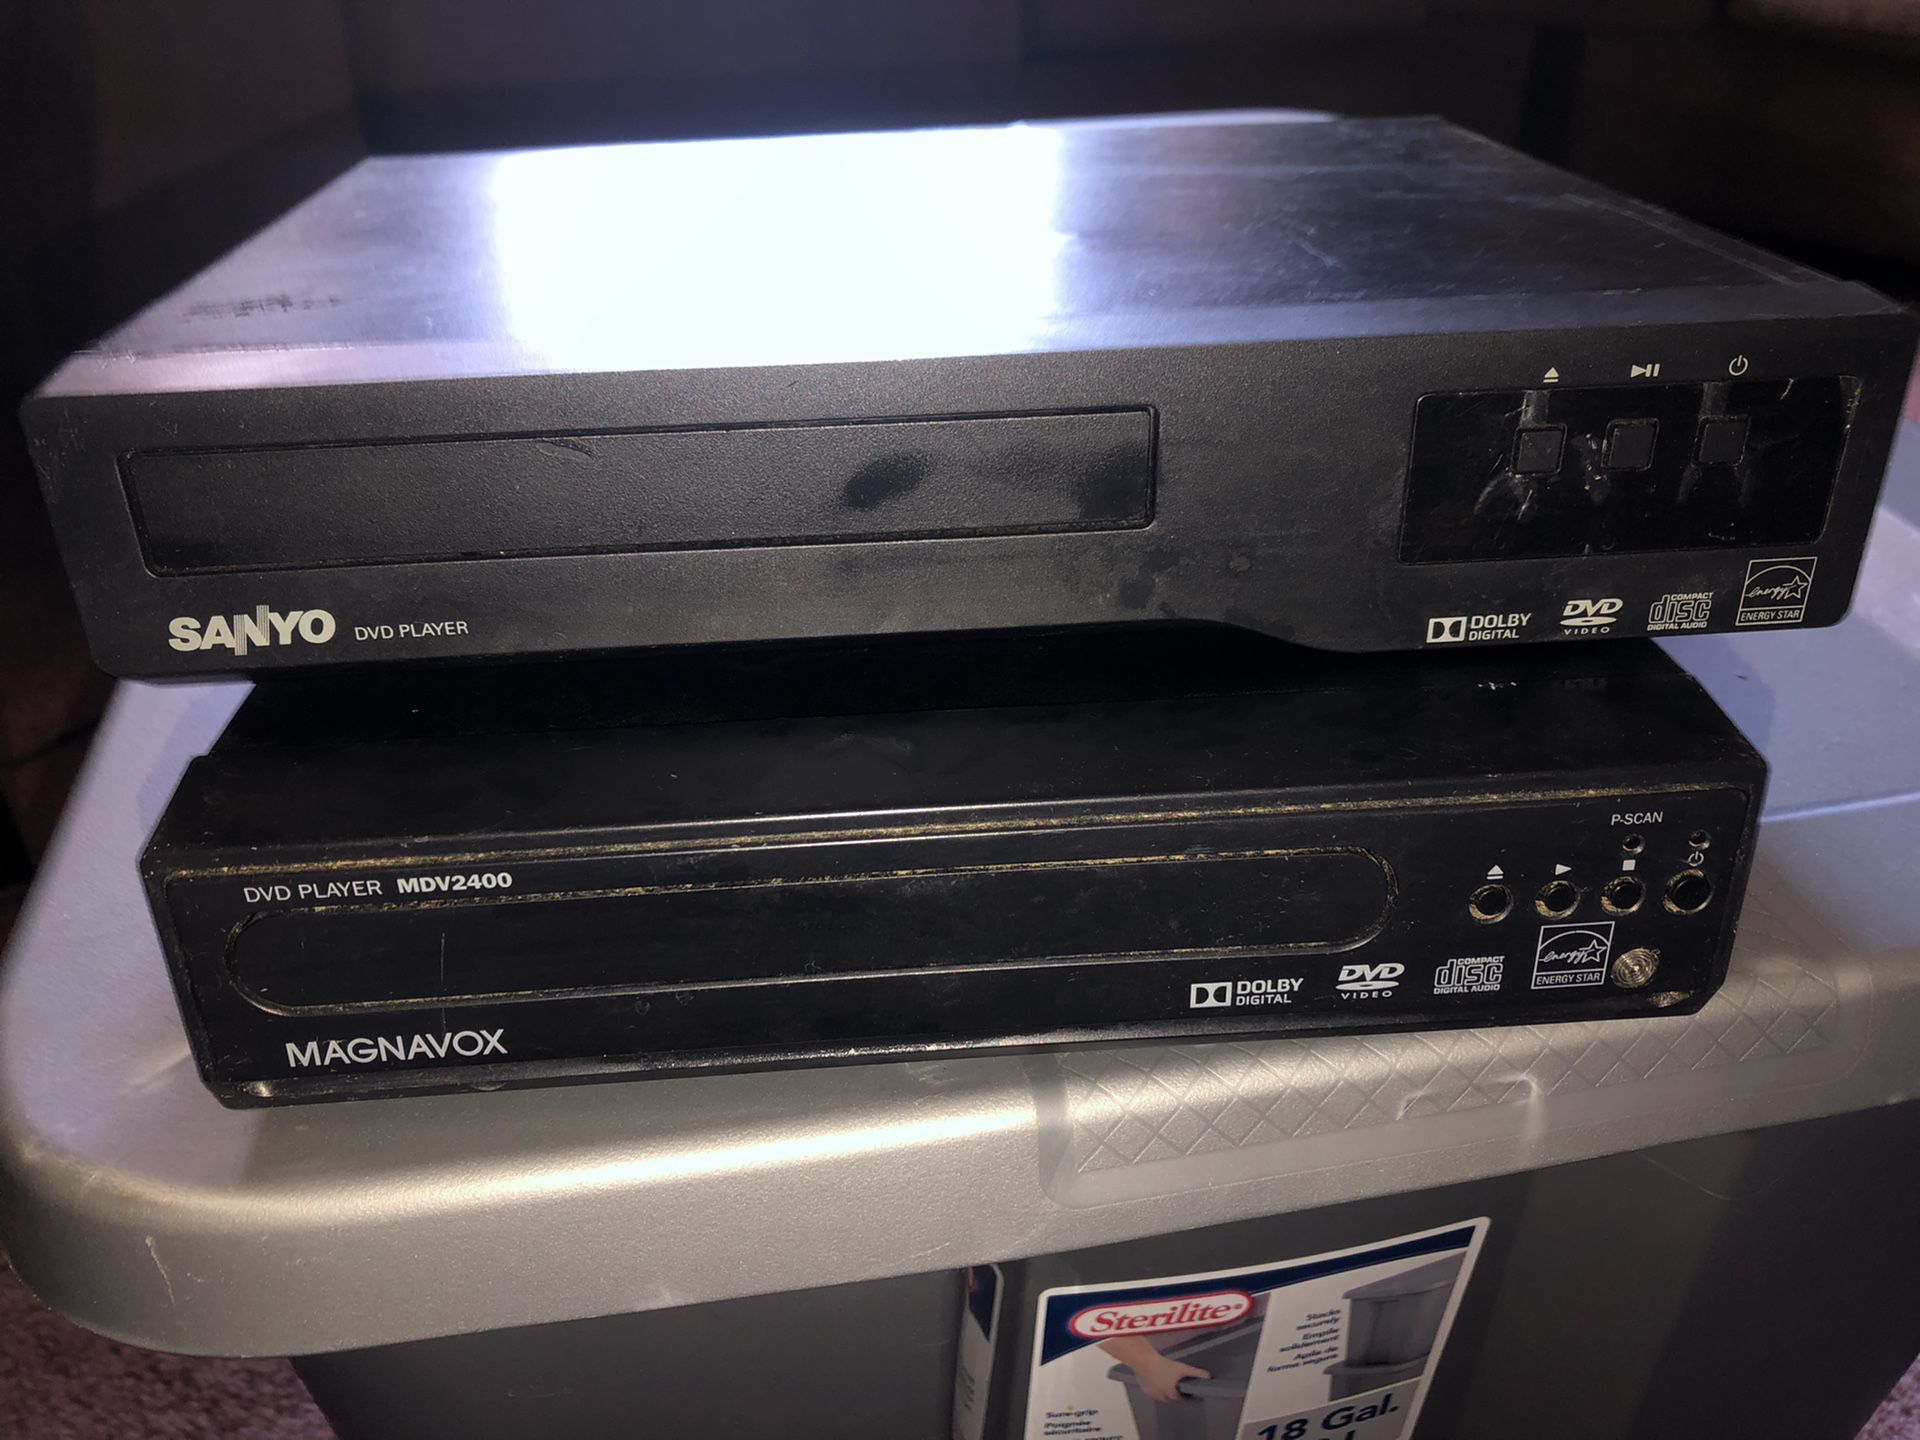 DVD players